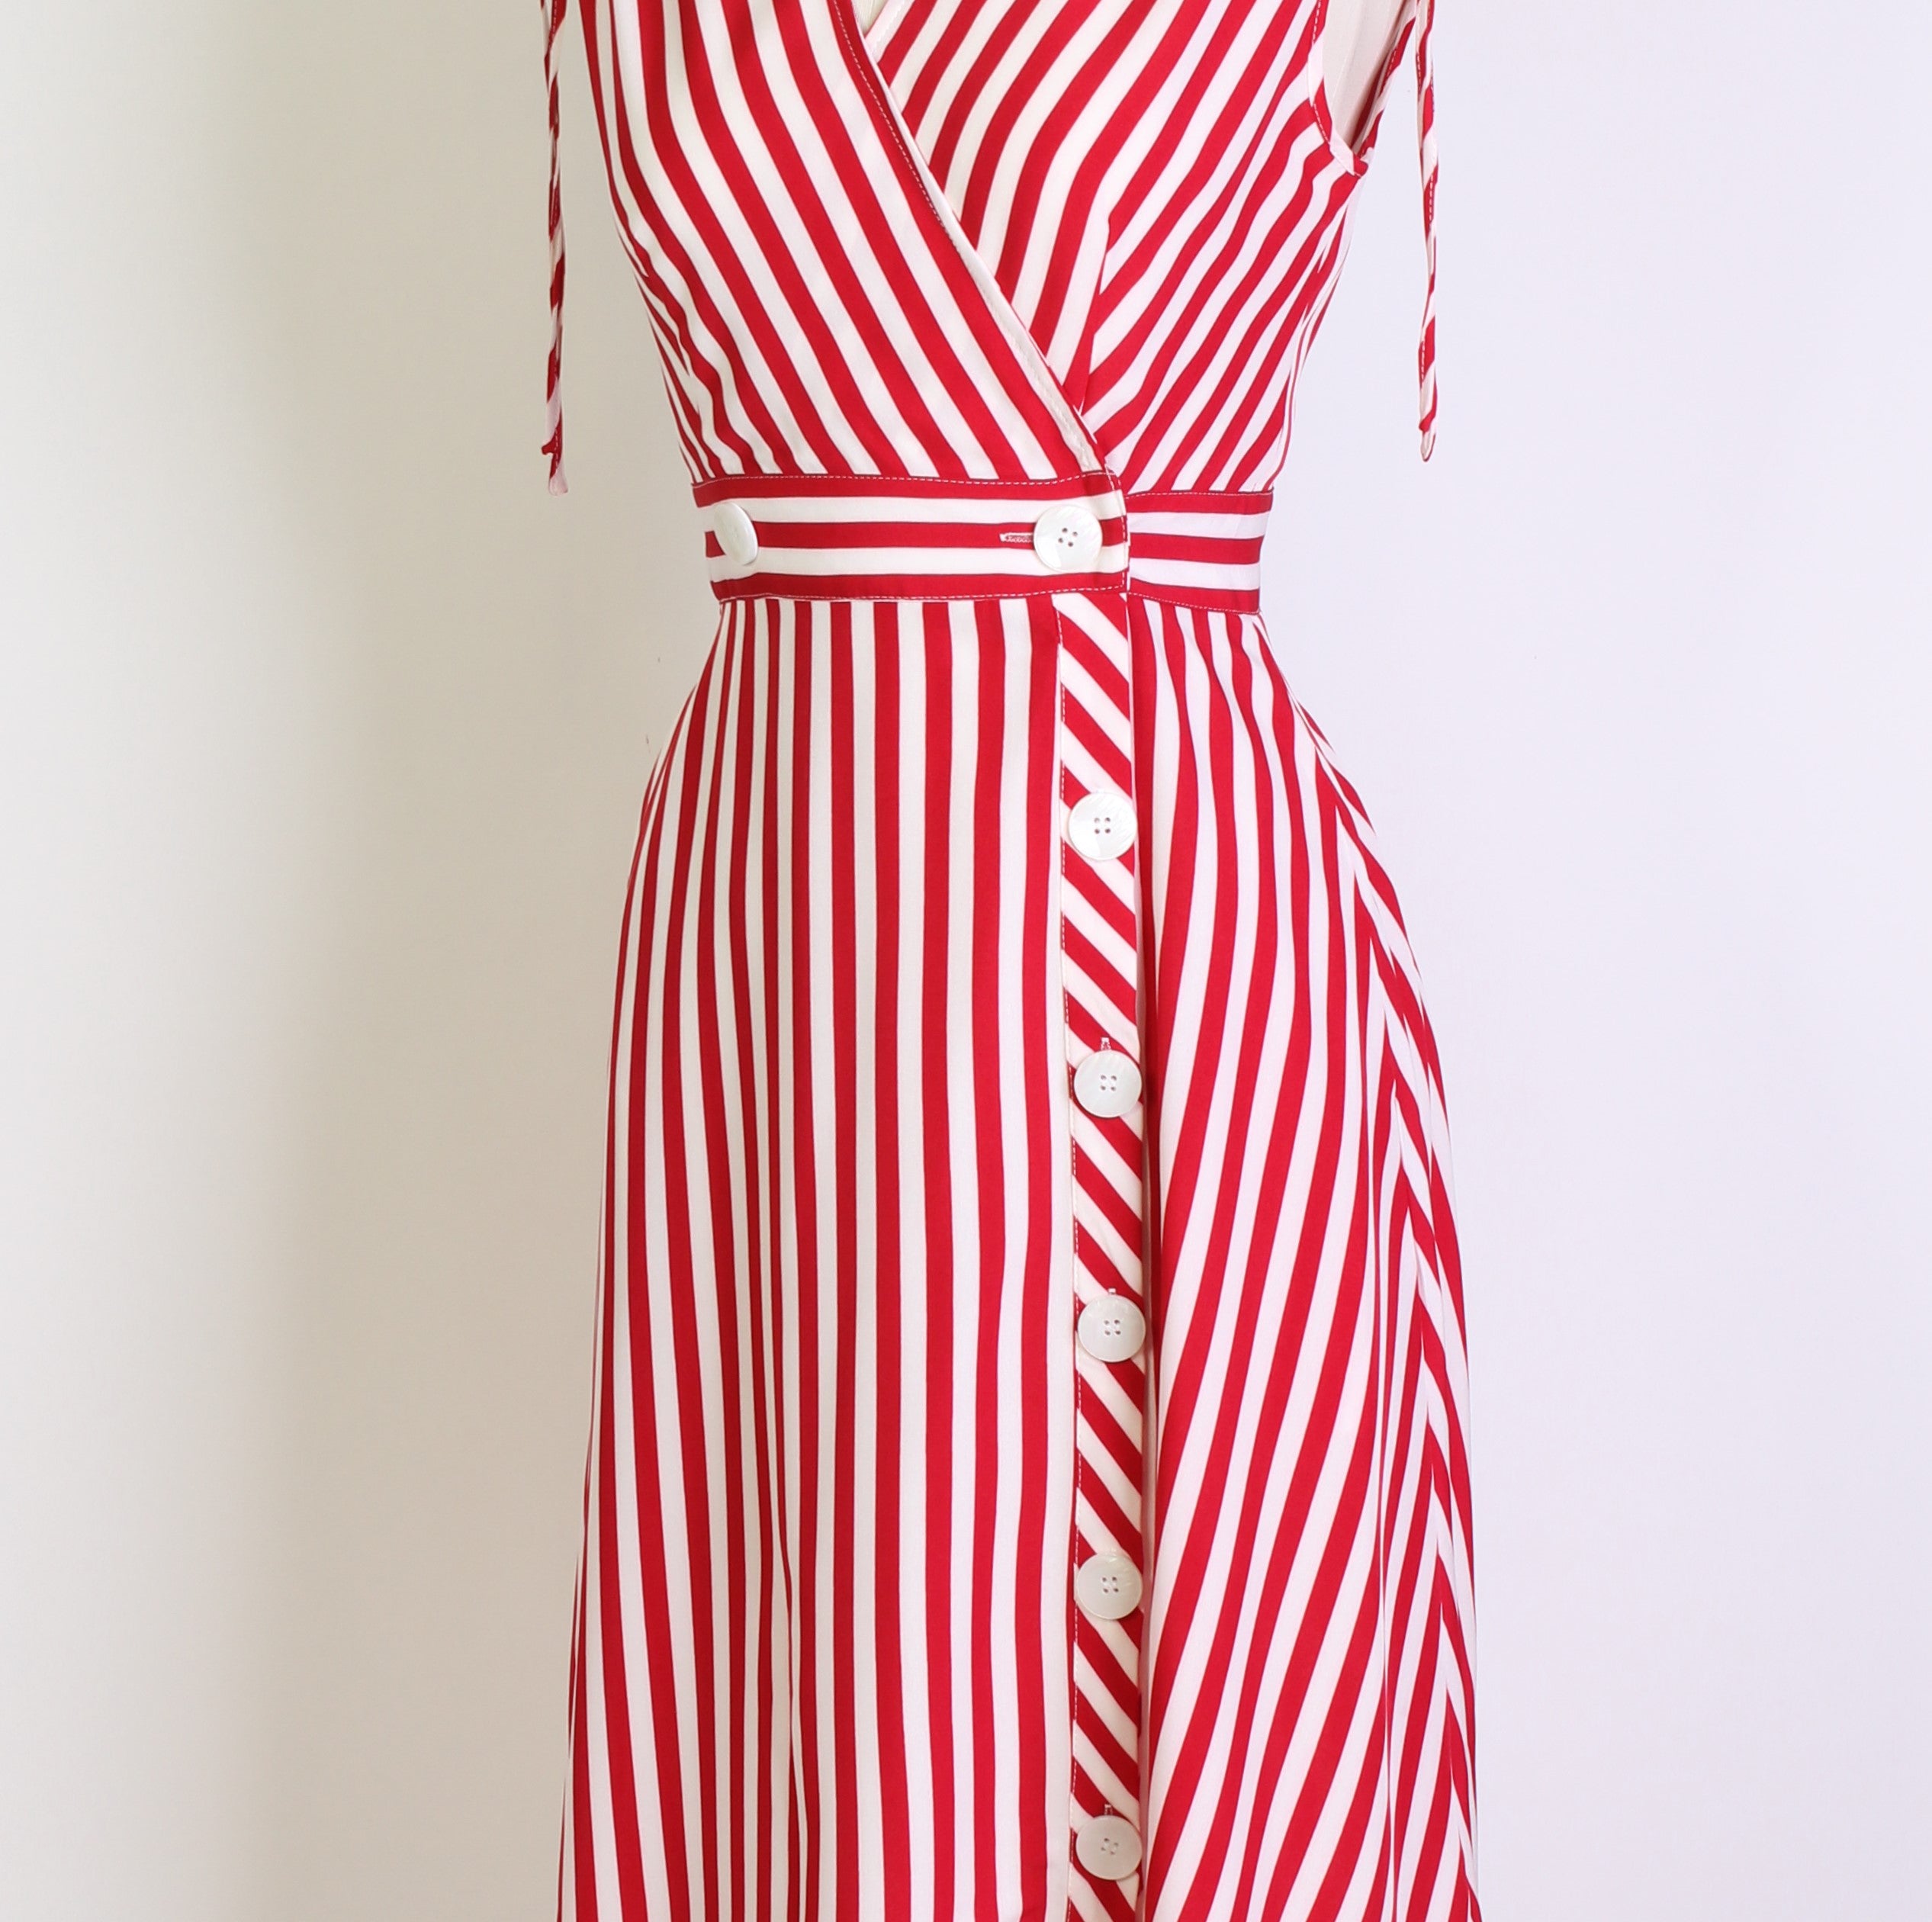 Red Striped Dress